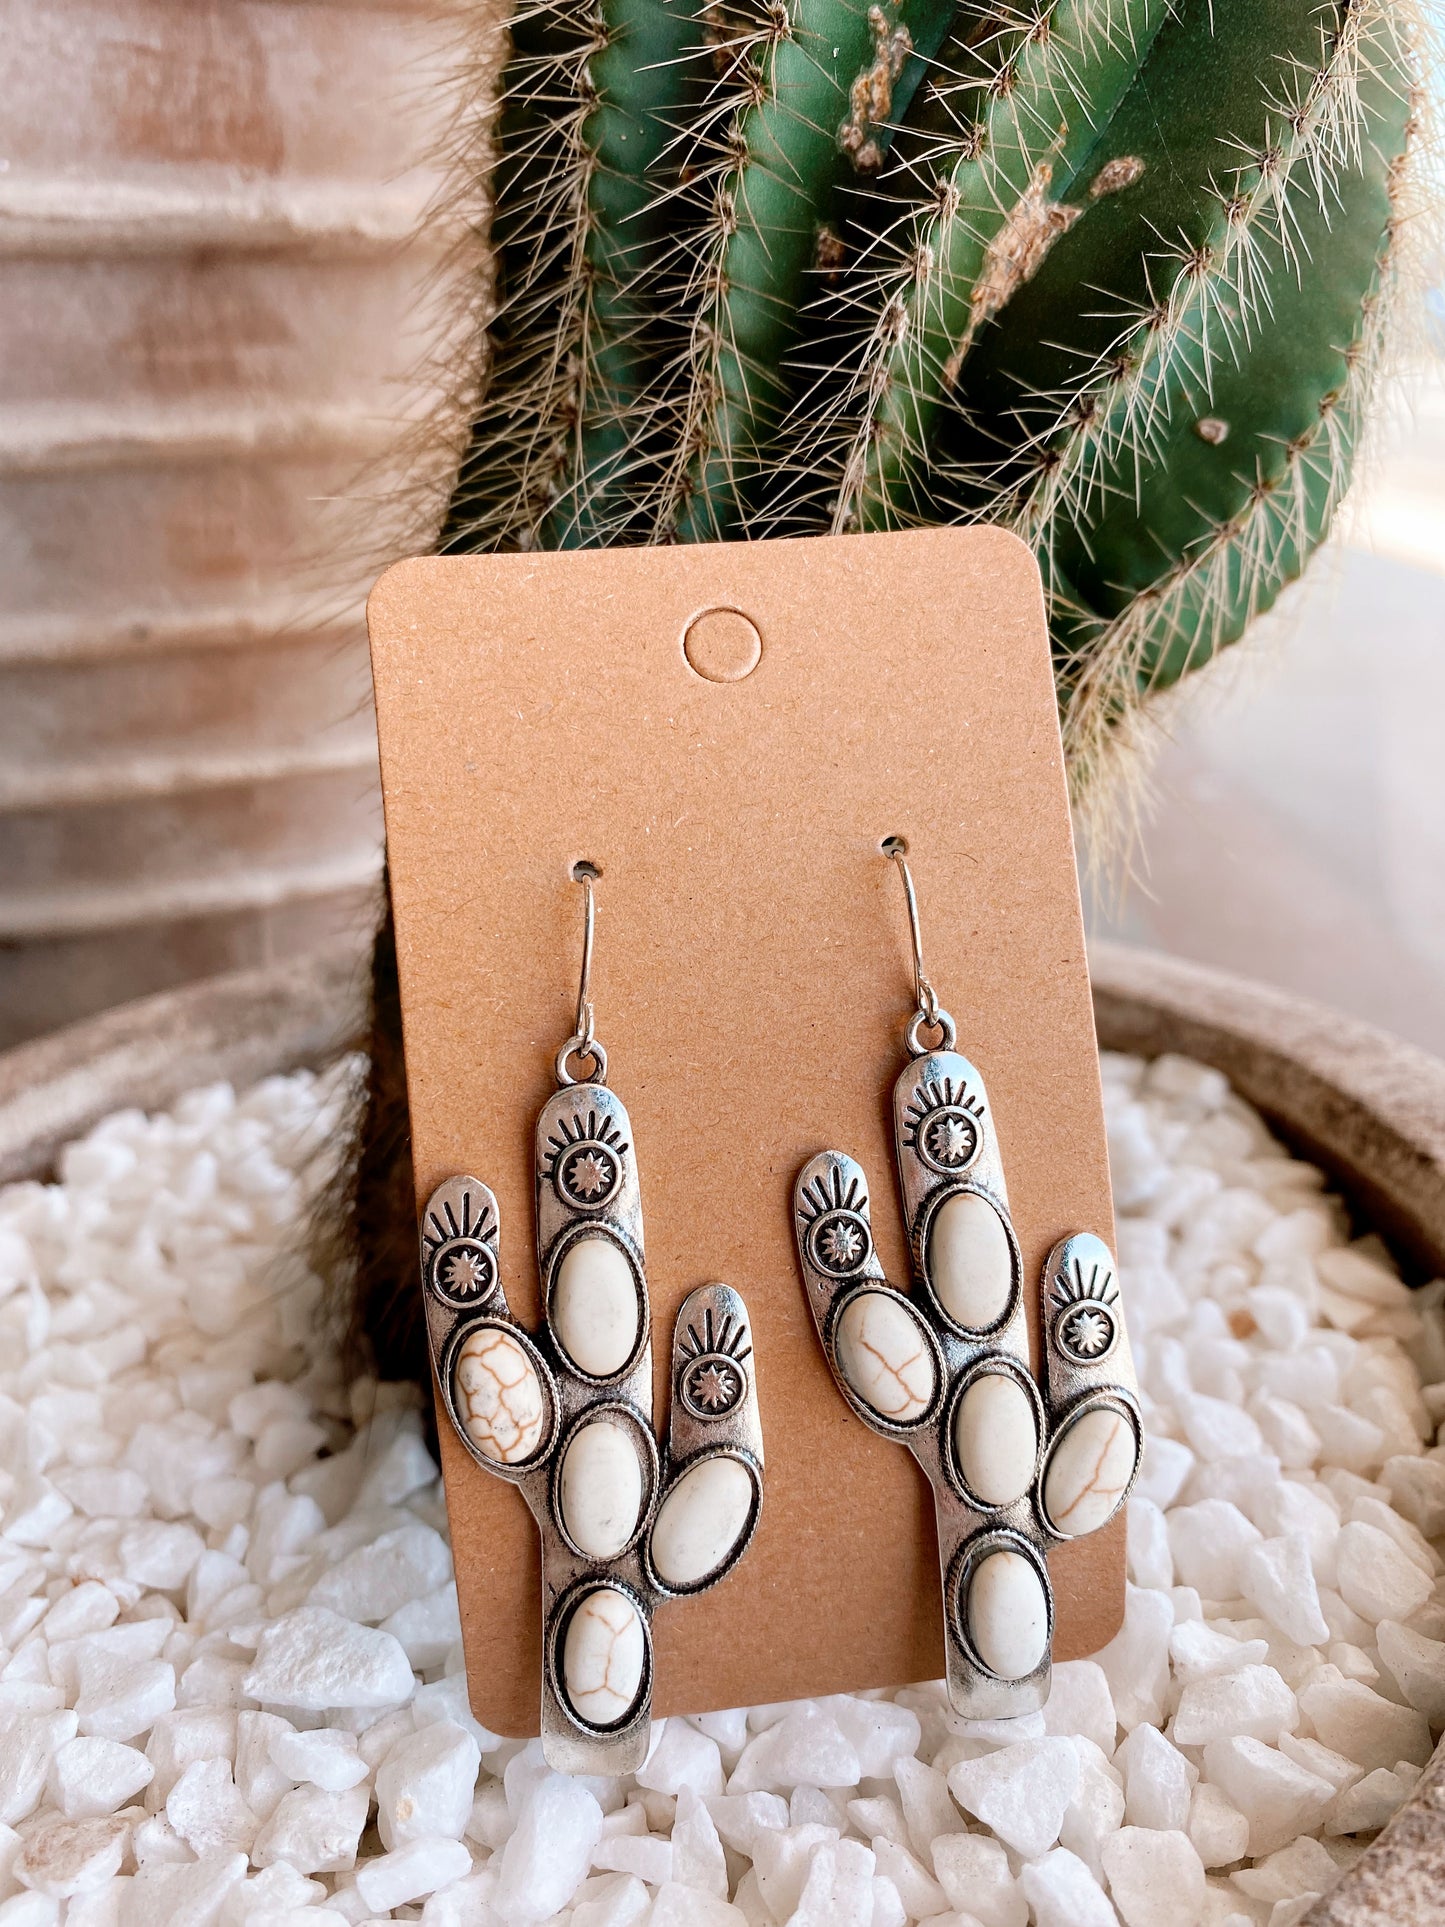 Cactus Earrings - Silver & White